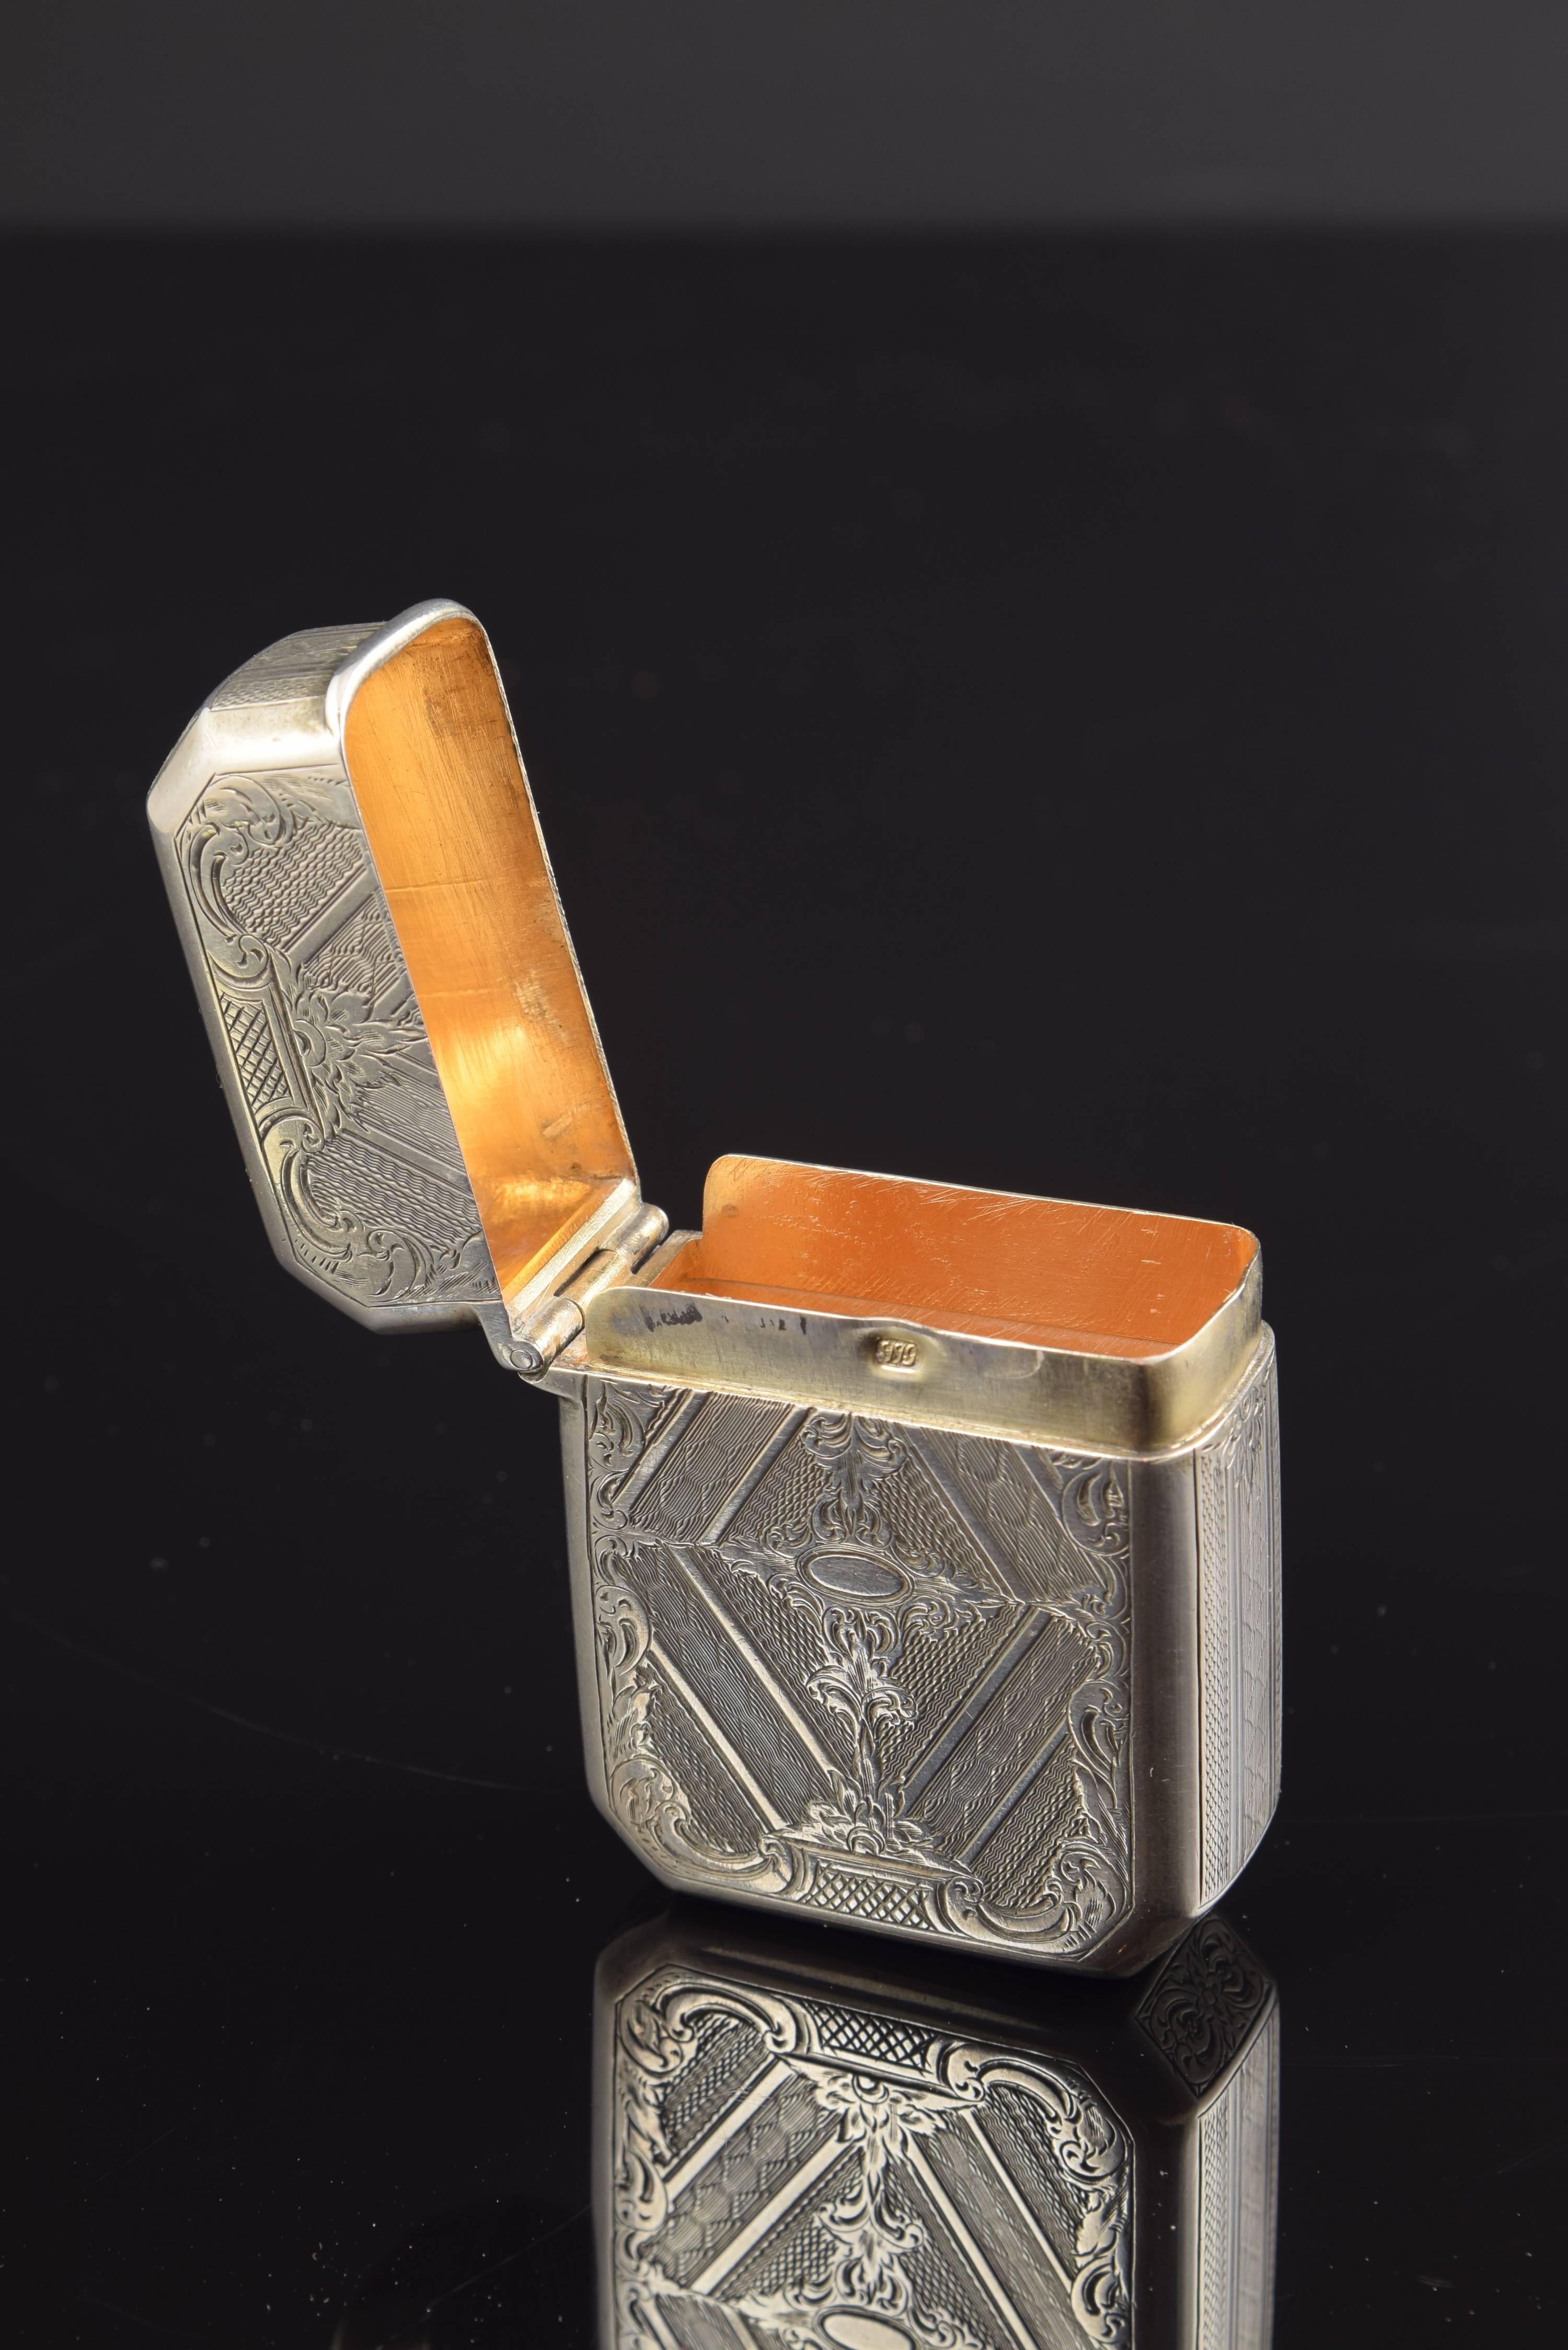 European Solid Silver Box, with Hallmarks, 19th-20th Centuries